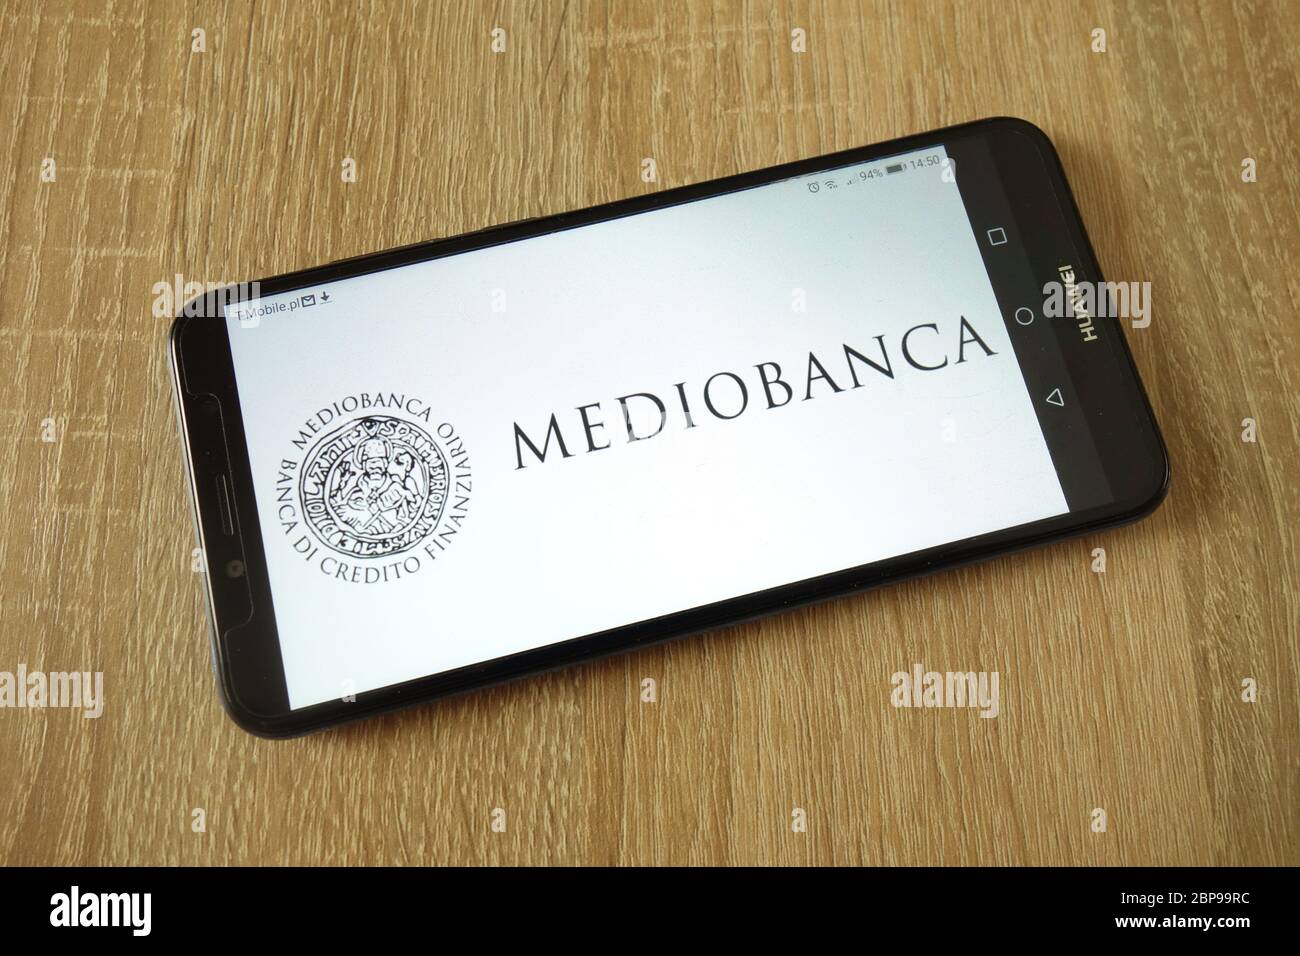 Mediobanca S.p.A. logo displayed on smartphone Stock Photo